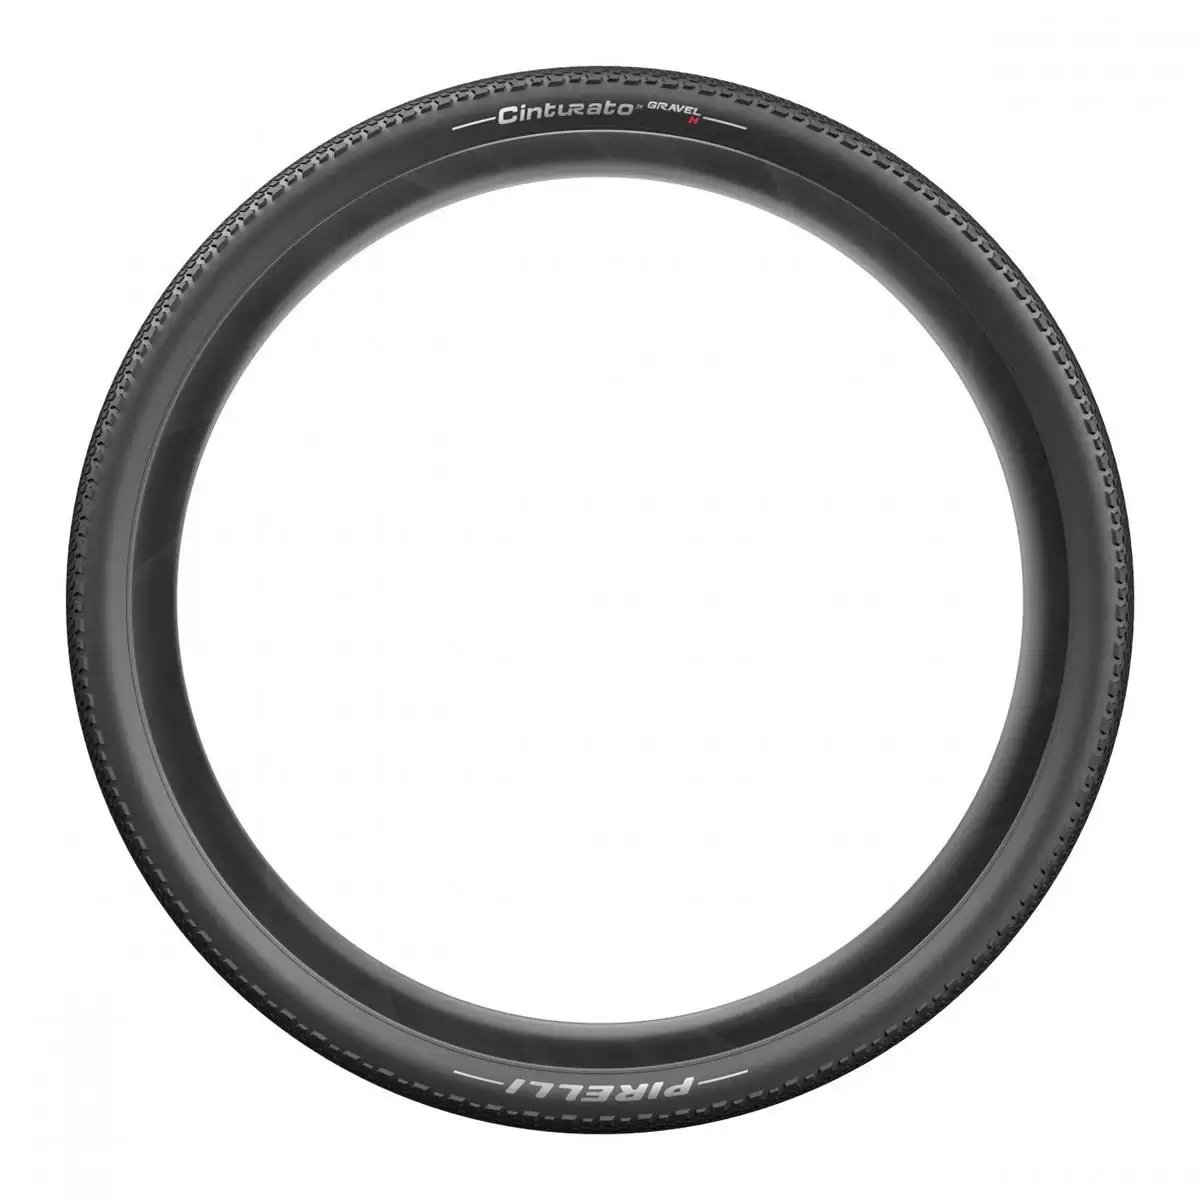 Tire Cinturato Gravel Hard Terrain 700x45c Tubeless Ready Black #3